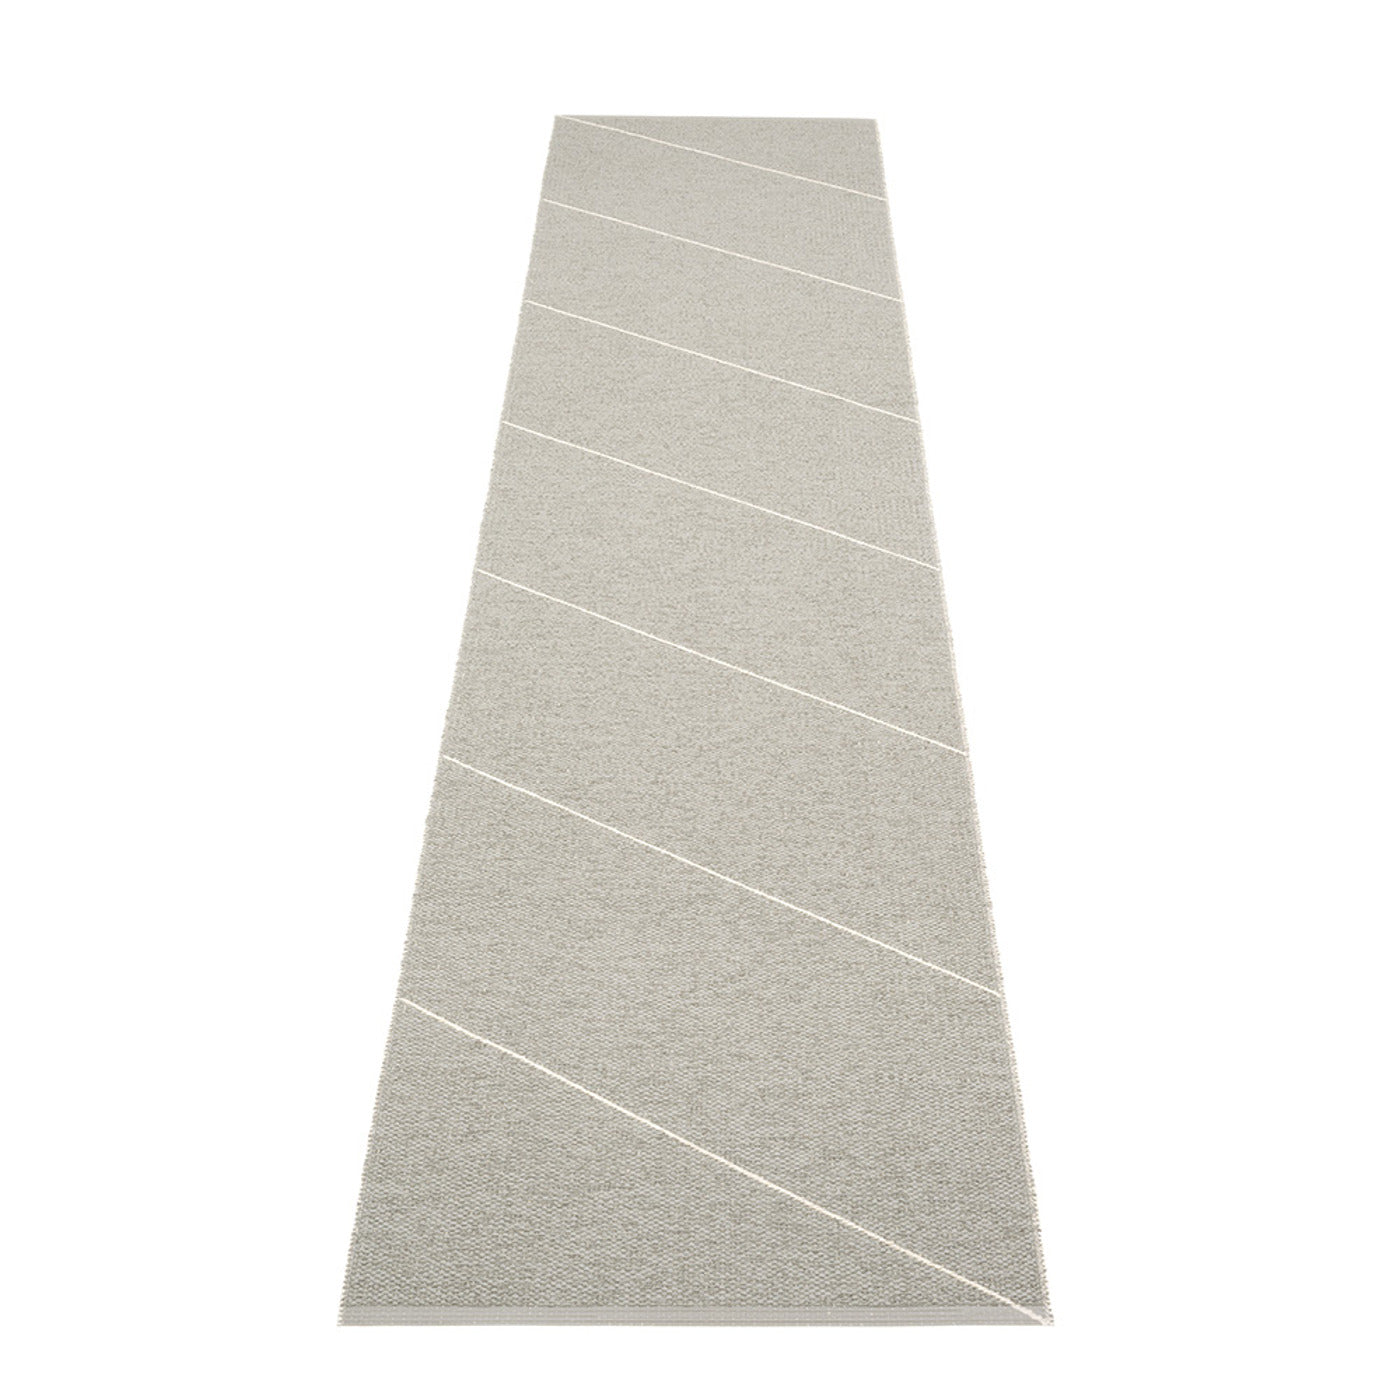 Sagg Main Plastic Floor Mats Warm Grey/Vanilla (Multiple Sizes)